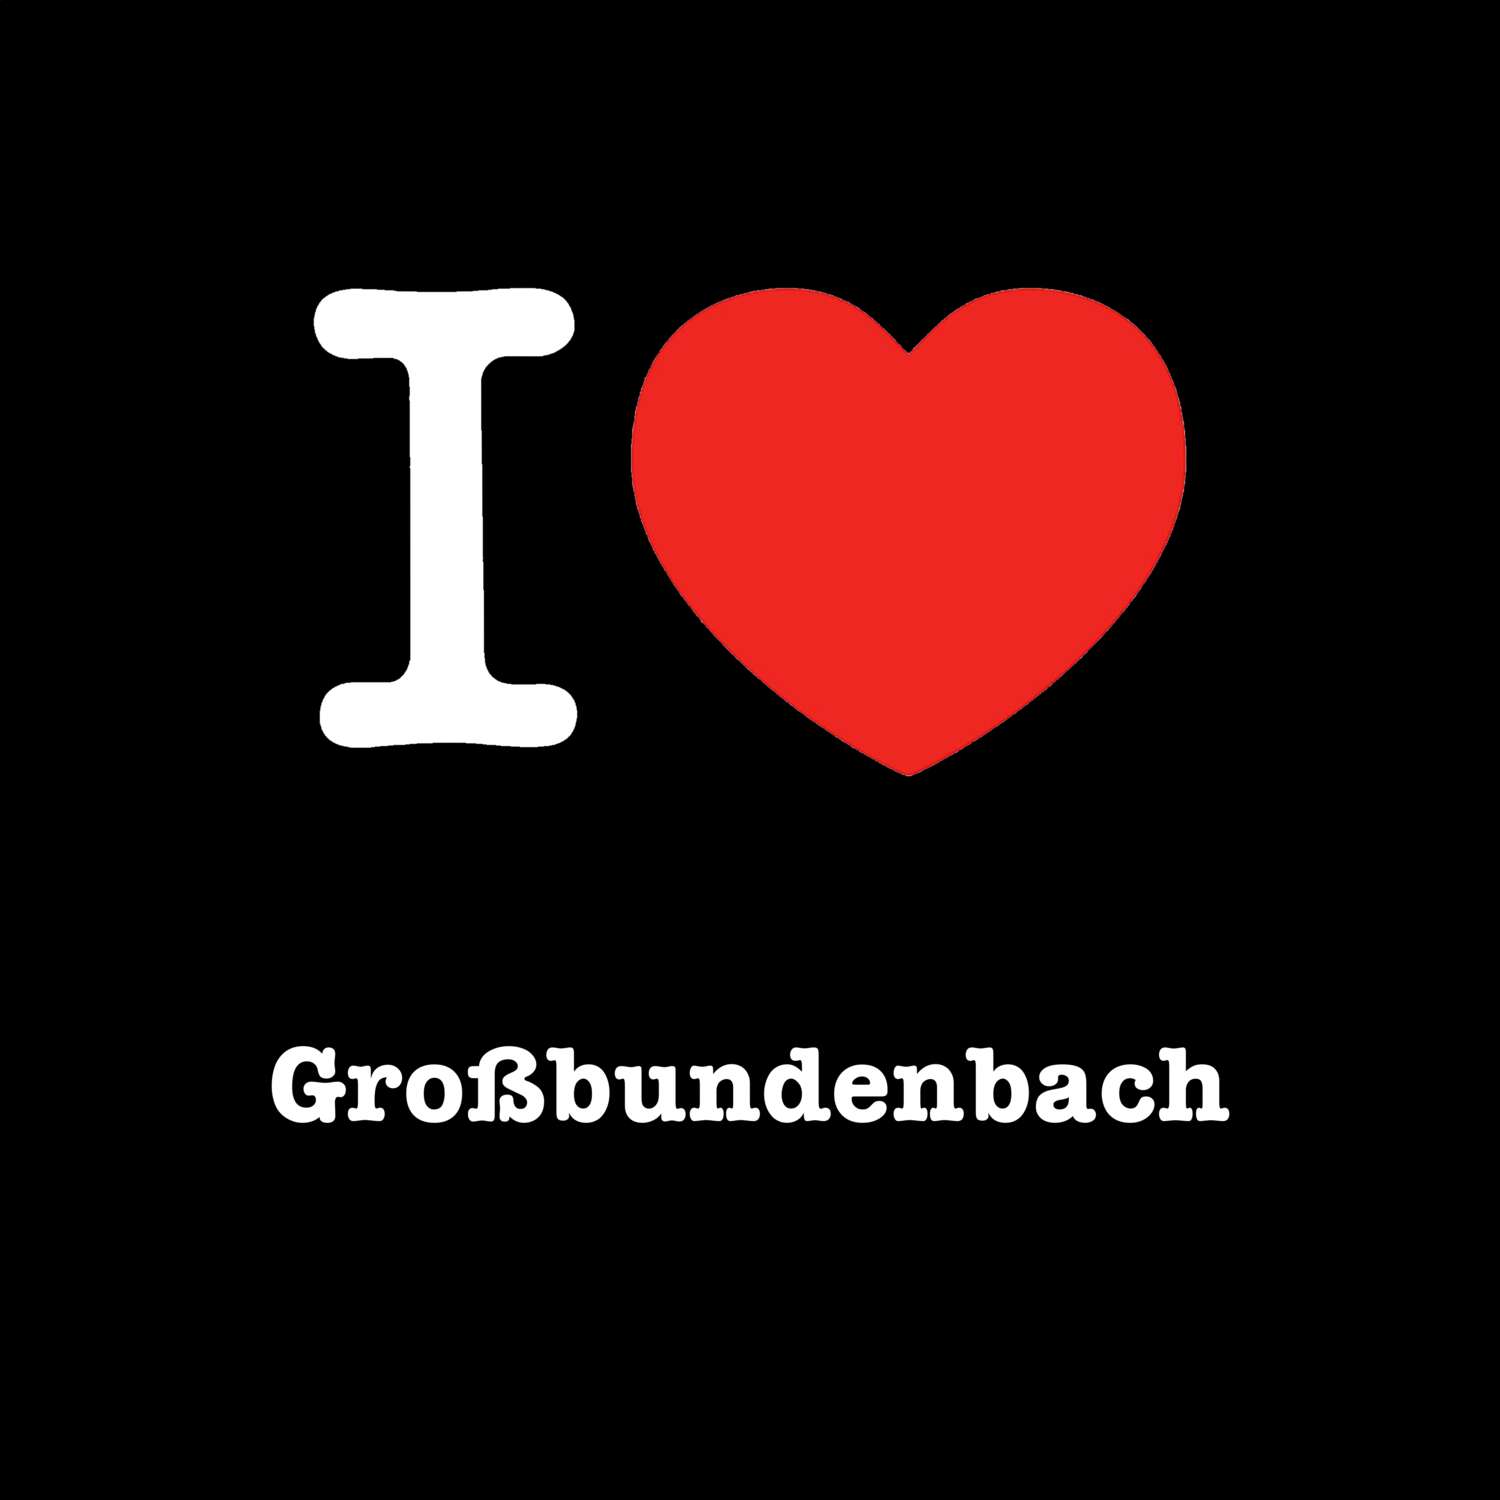 Großbundenbach T-Shirt »I love«